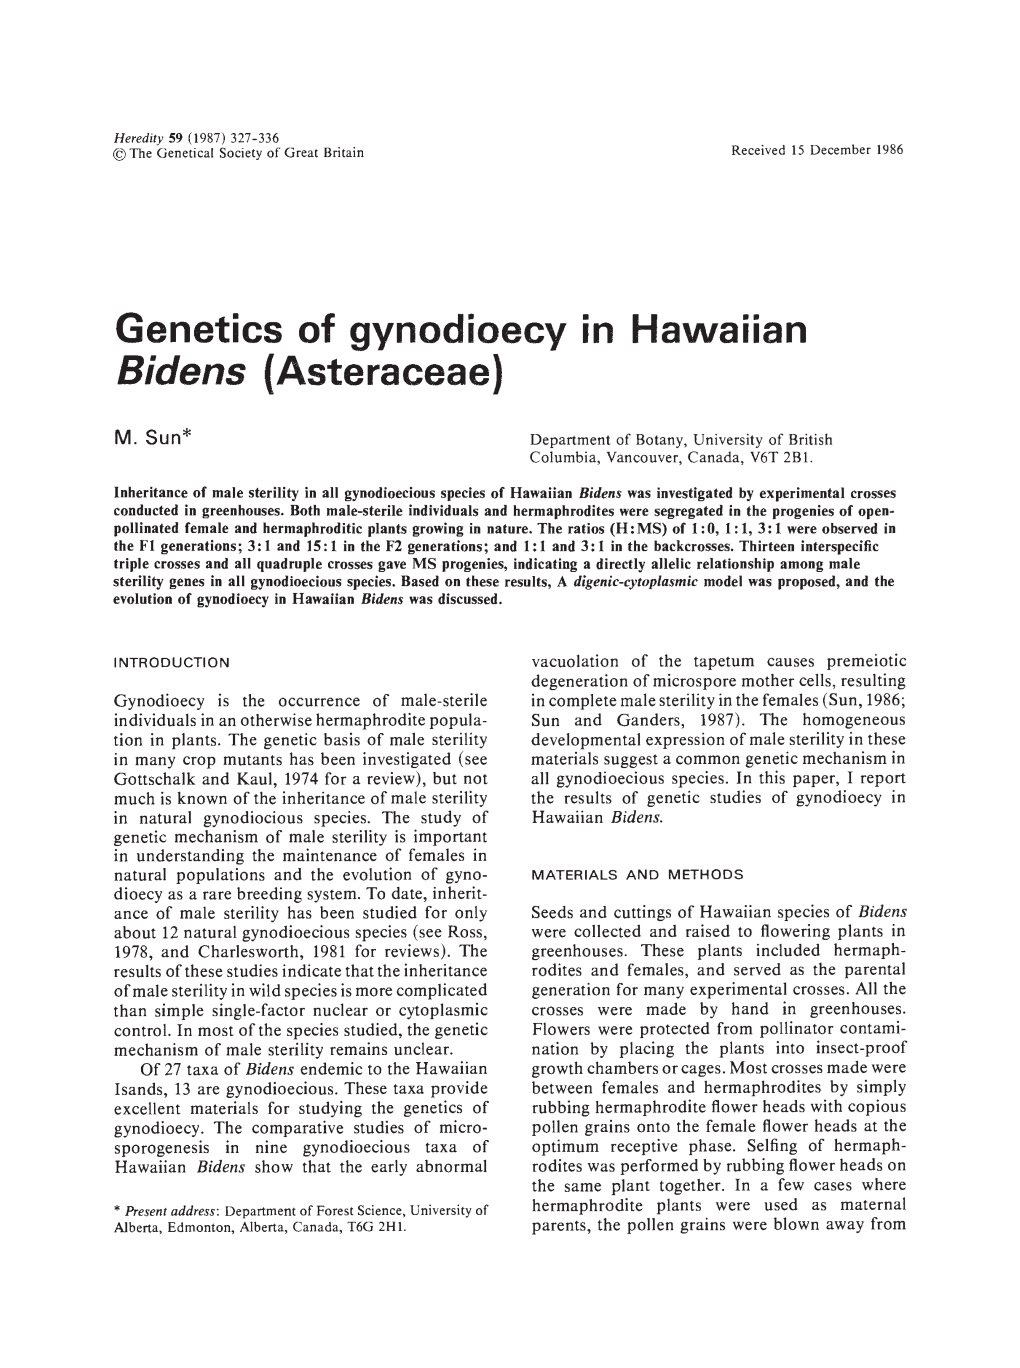 Genetics of Gynodioecy in Hawaiian Bidens (Asteraceae)